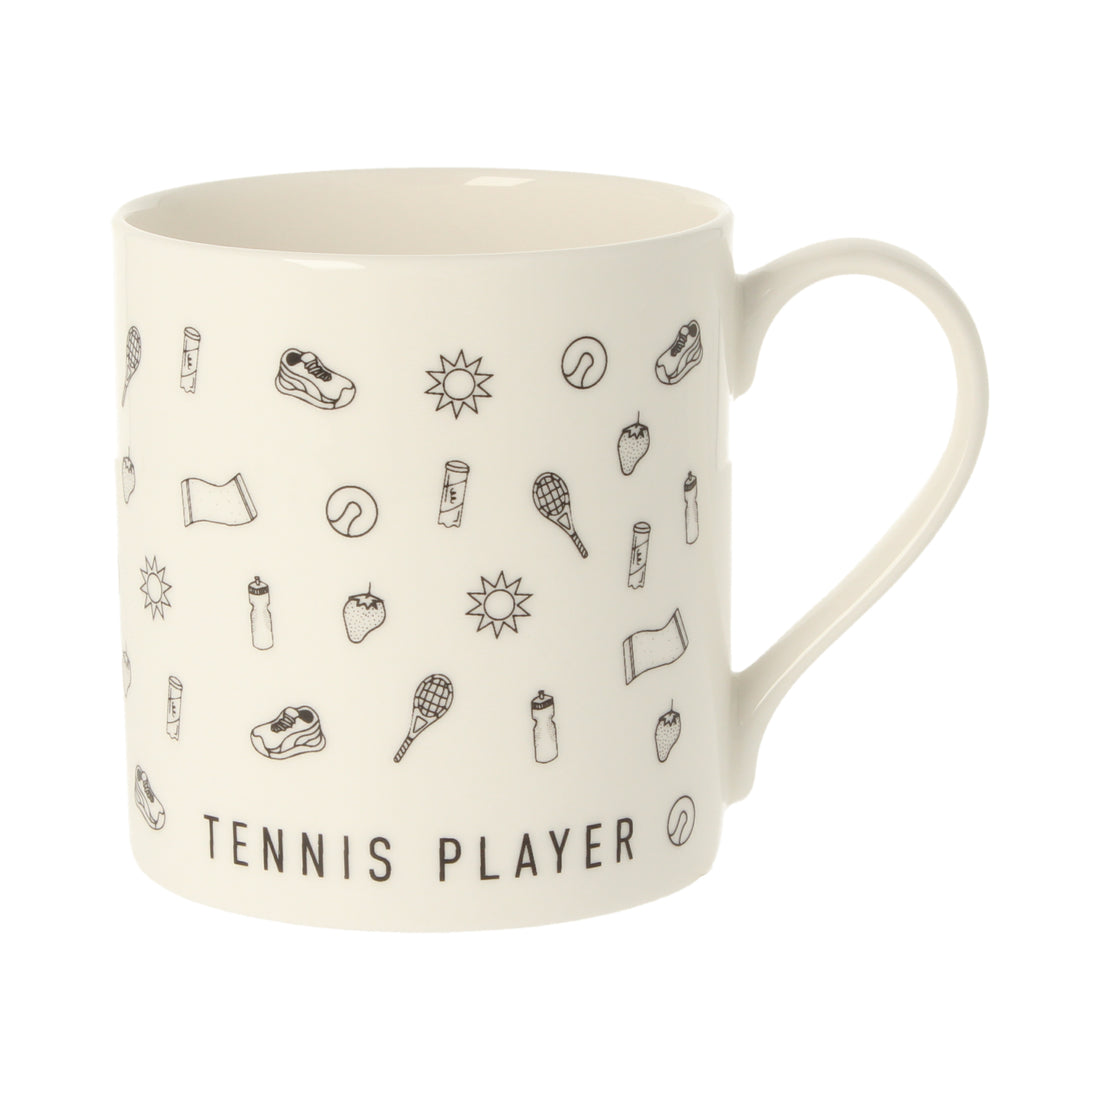 Tennis Player Mug